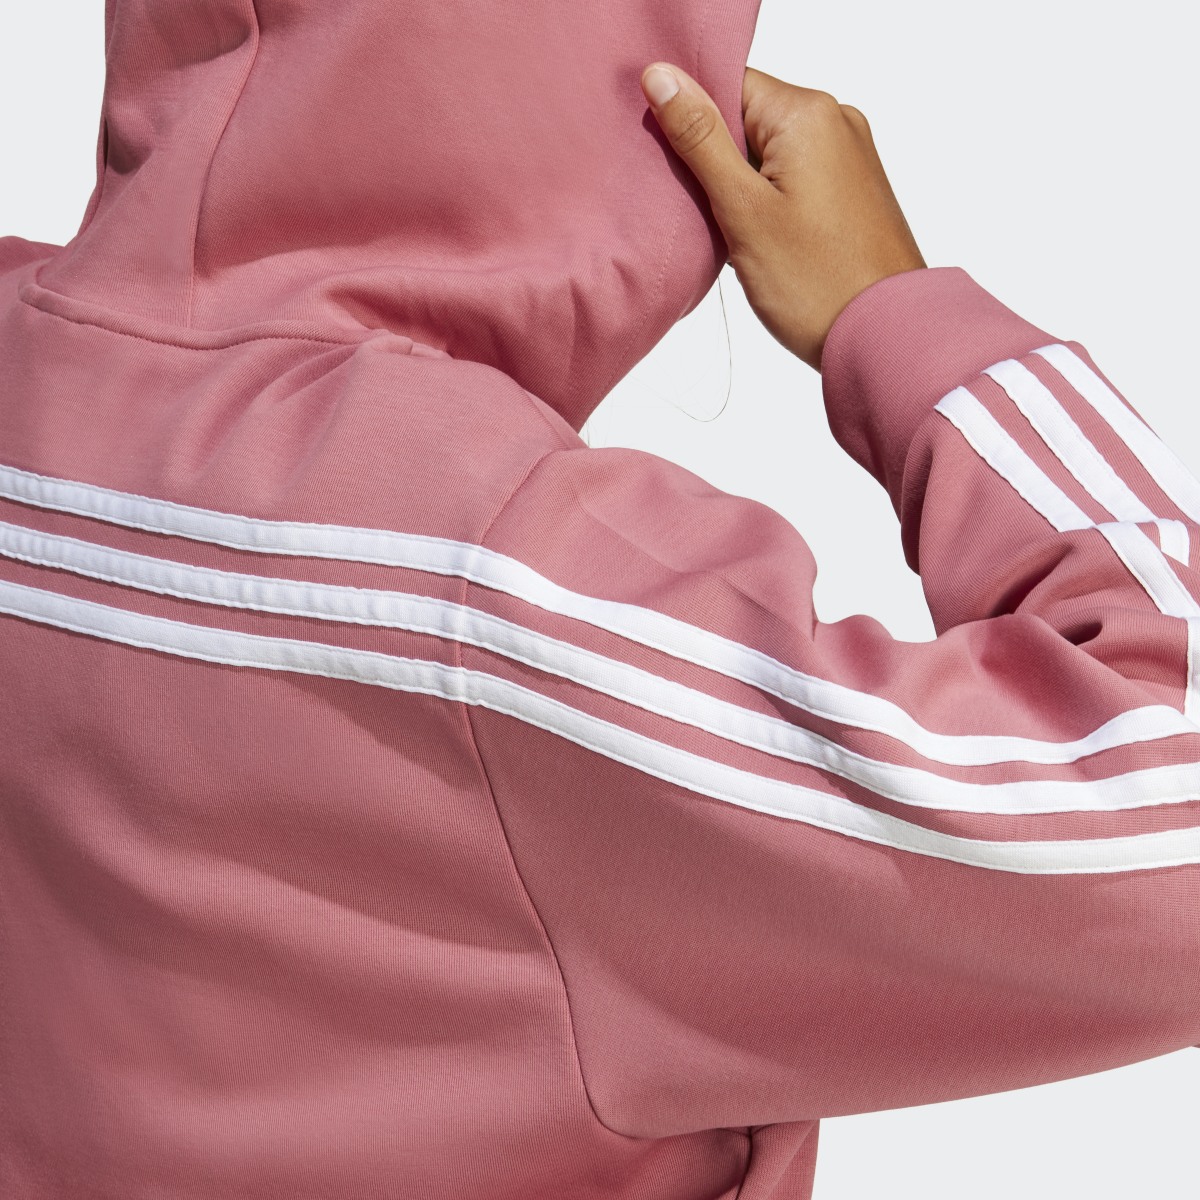 Adidas Future Icons 3-Stripes Full-Zip Hoodie. 7